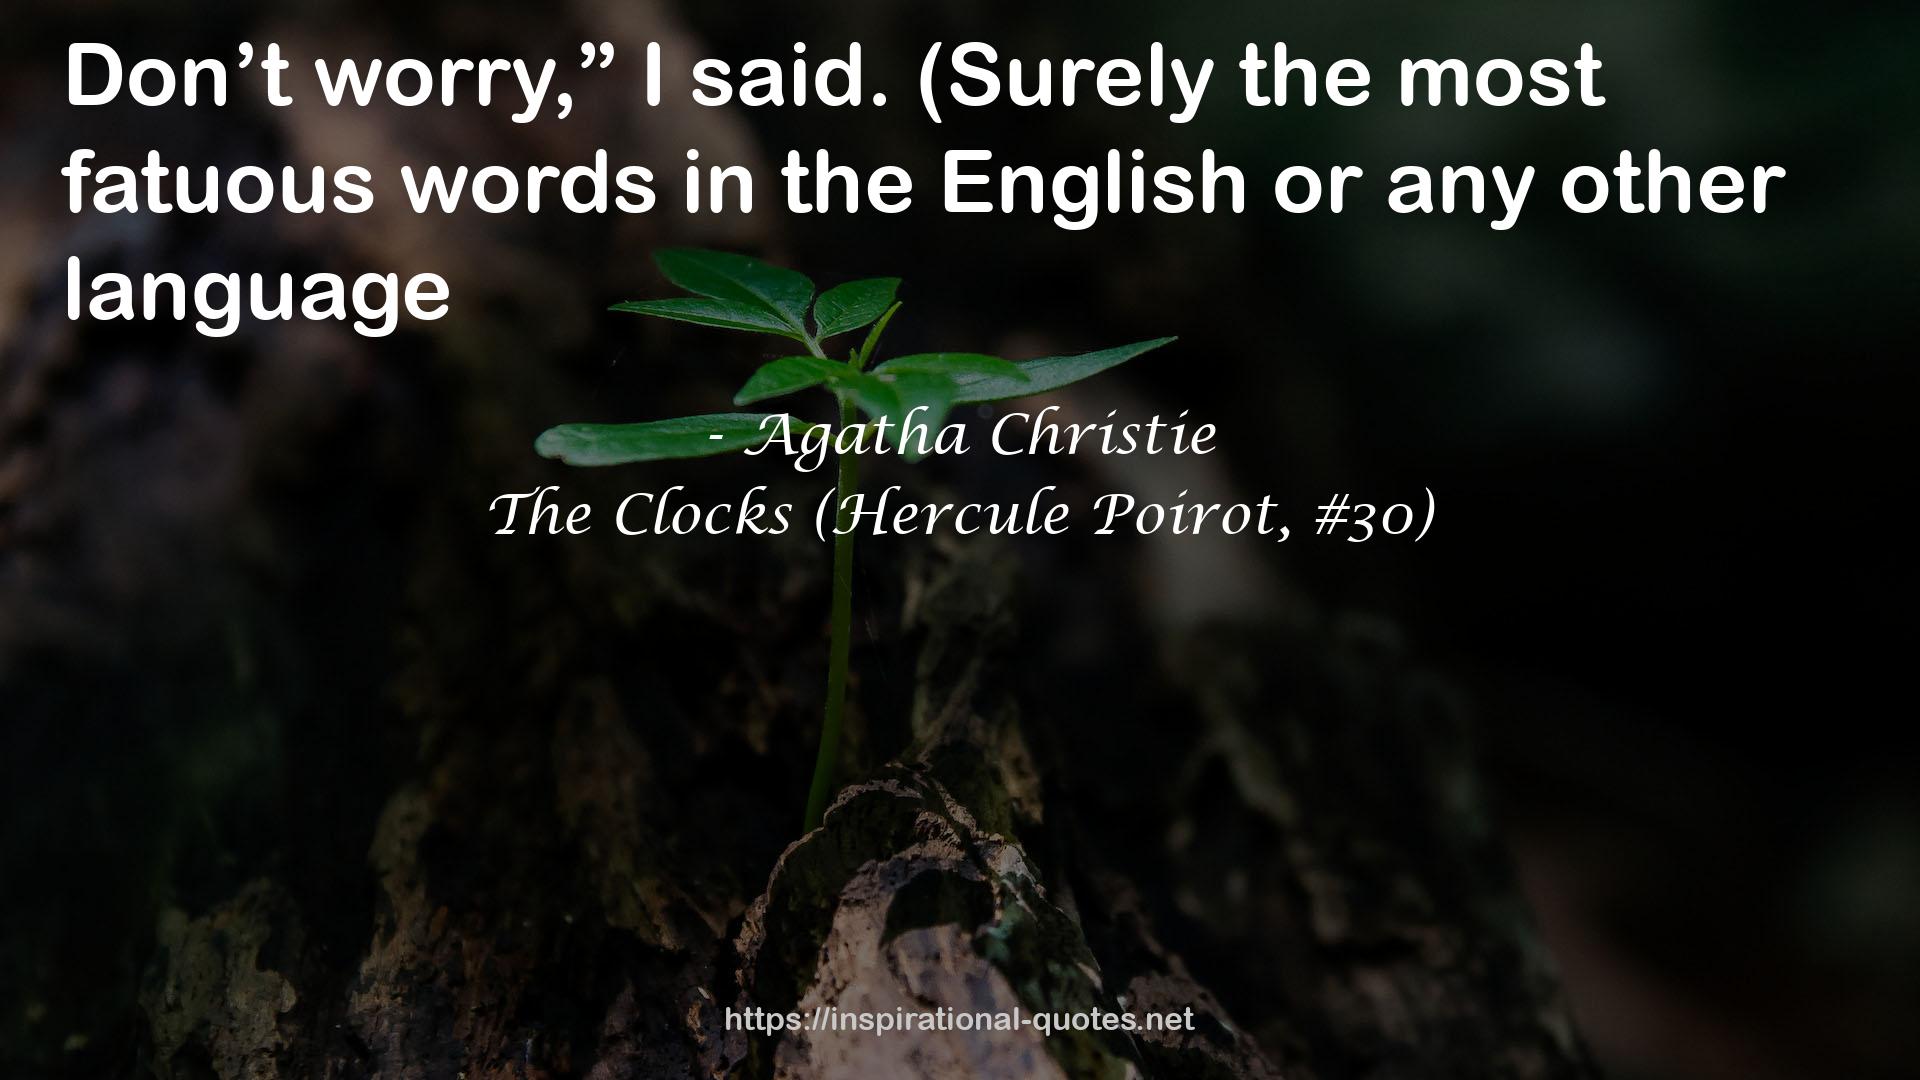 The Clocks (Hercule Poirot, #30) QUOTES